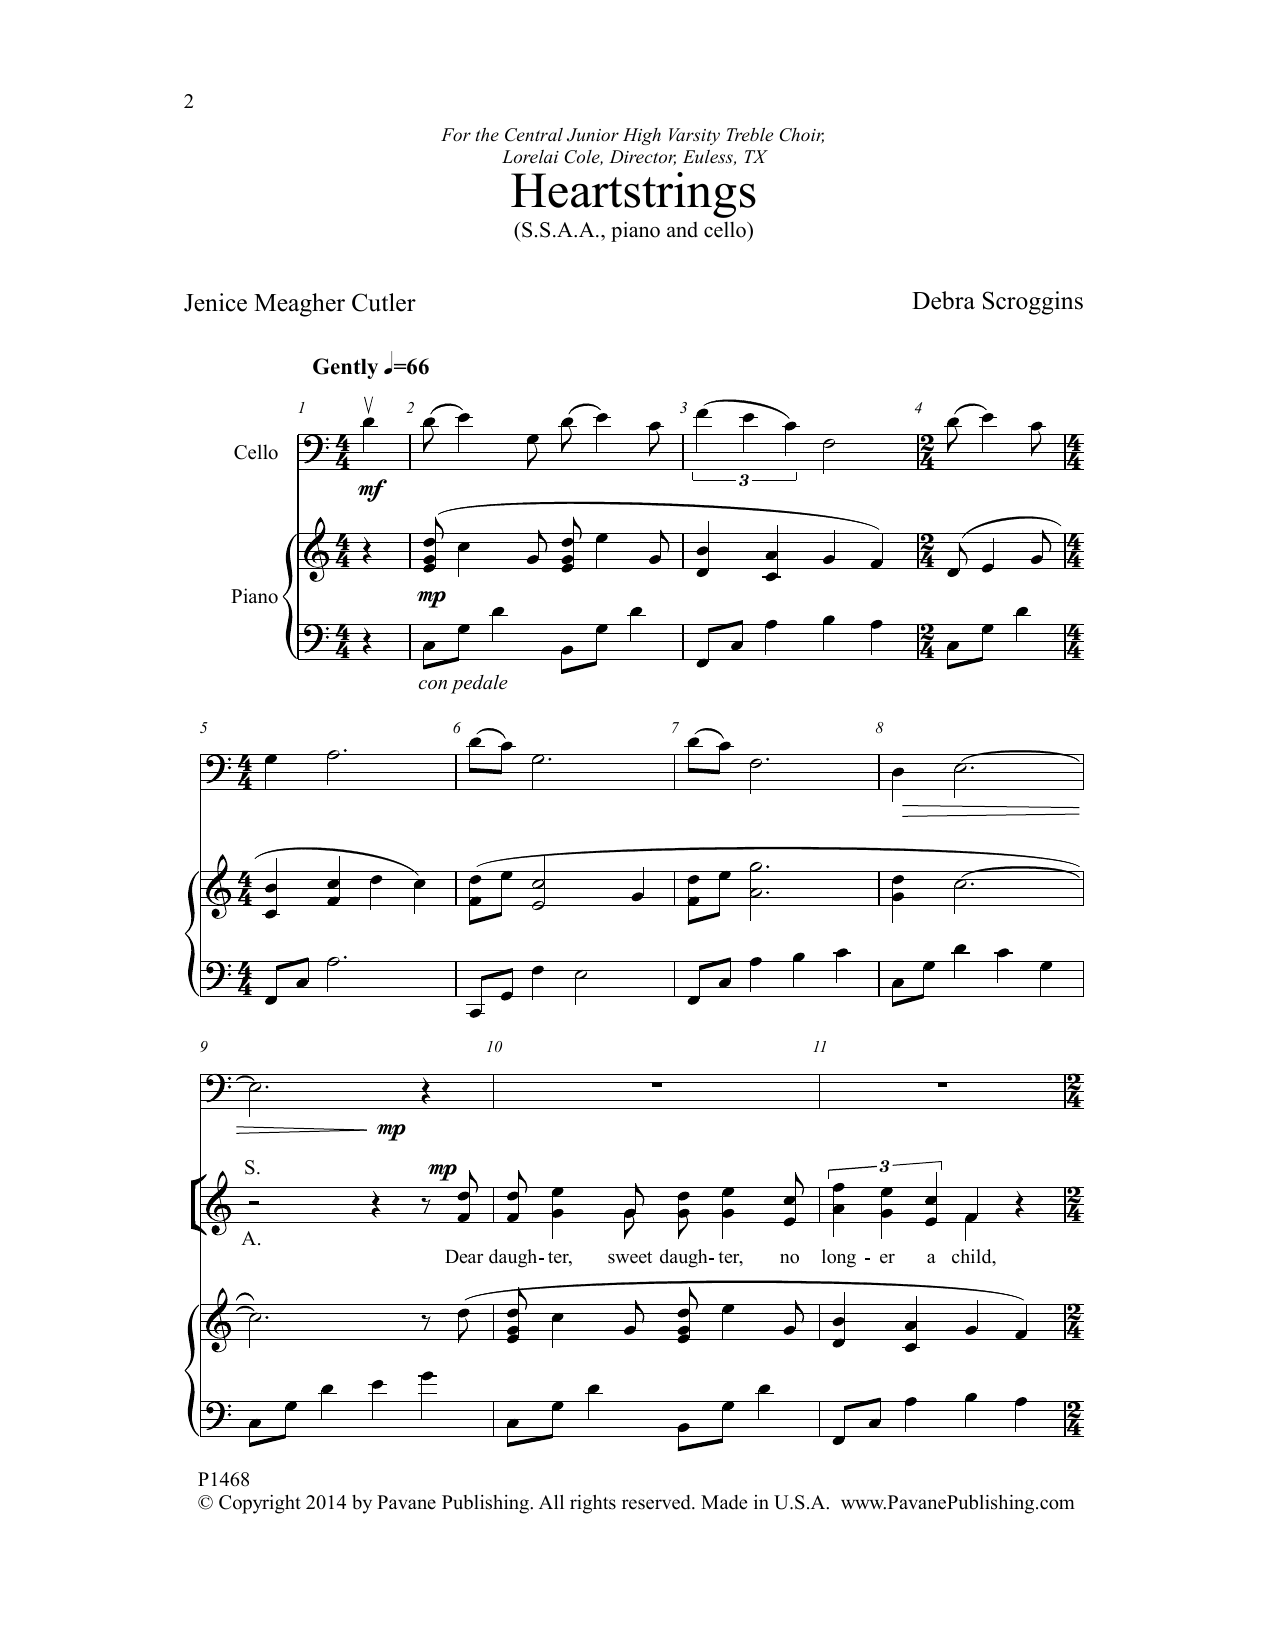 Debra Scroggins Heartstrings Sheet Music Notes & Chords for Choral - Download or Print PDF